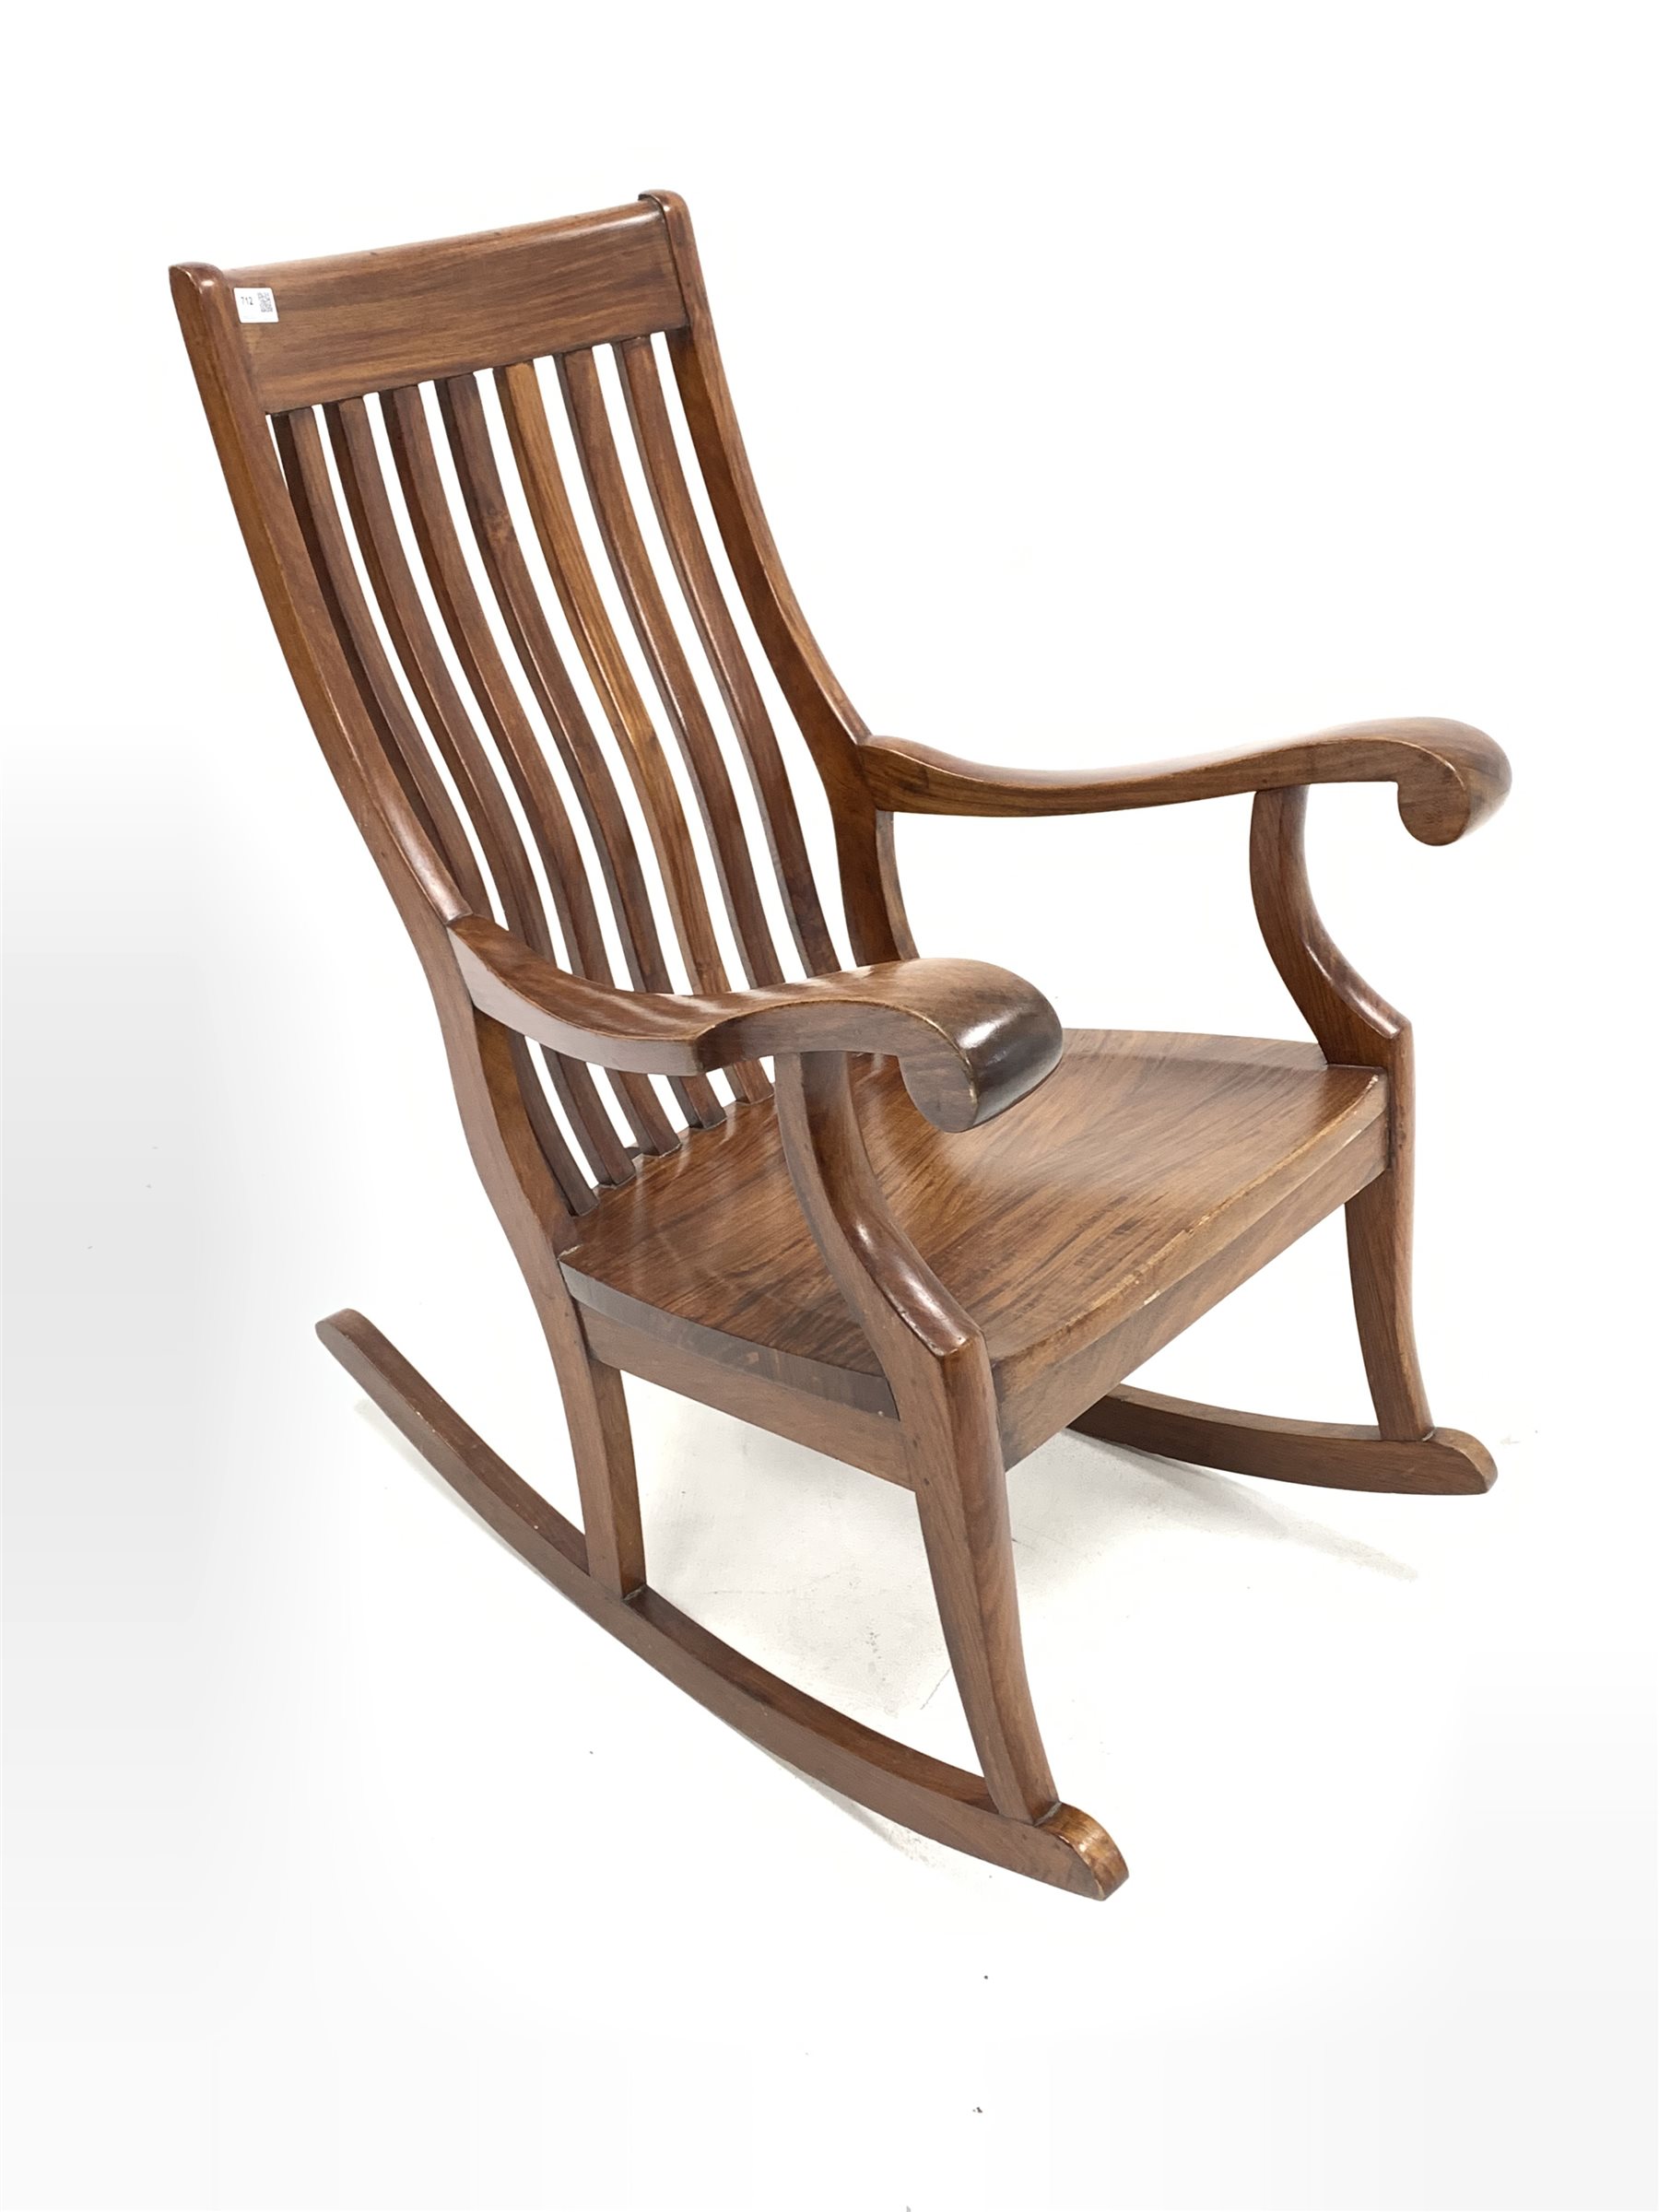 20th century hardwood rocking chair